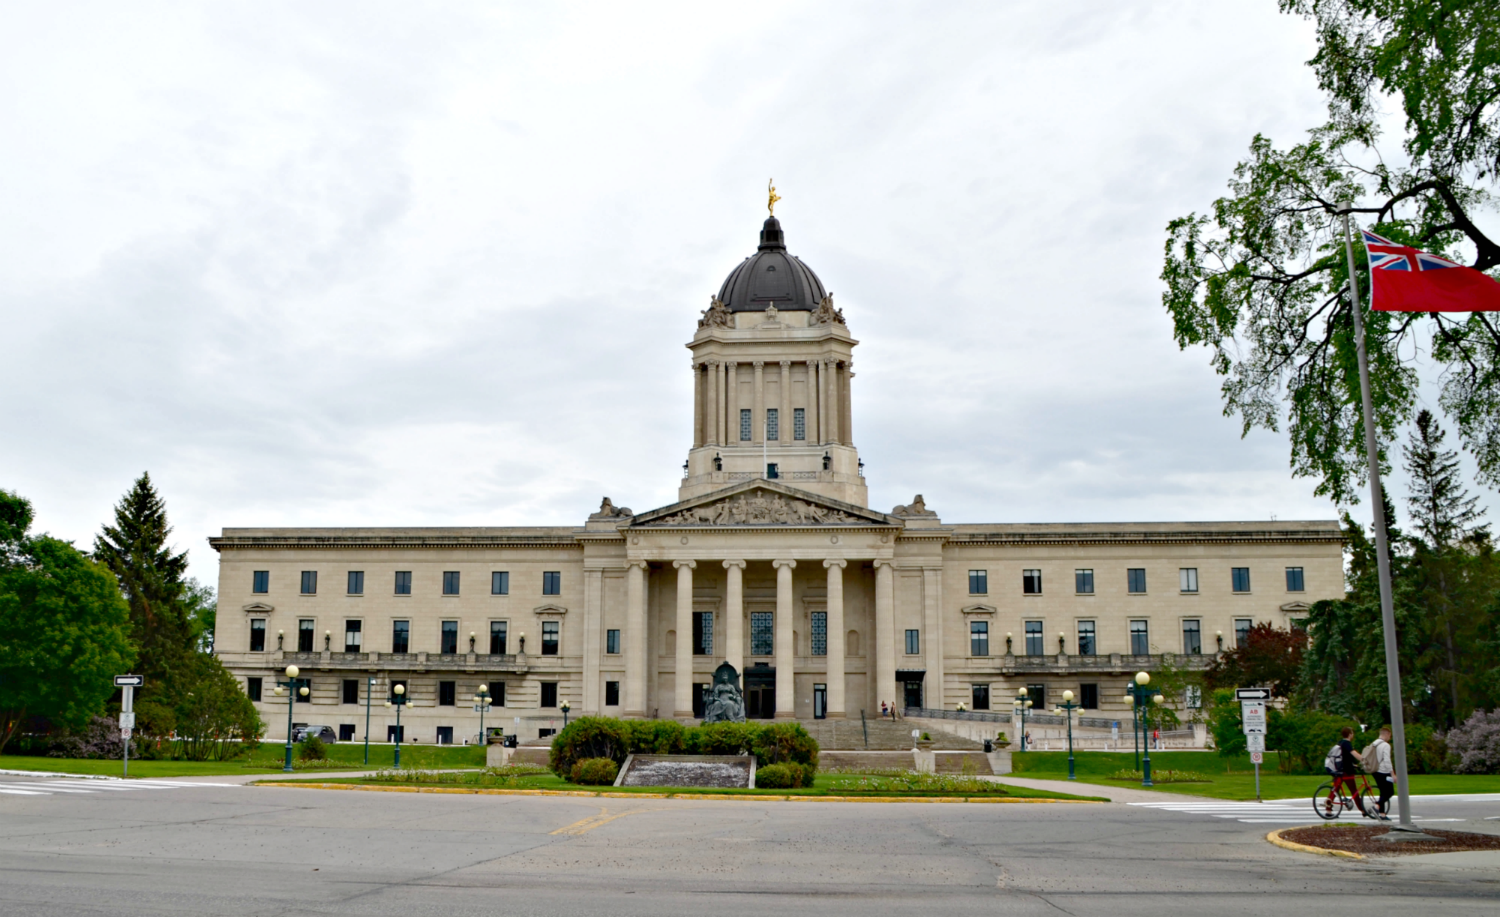 Hermetic Code Tour with Dr. Frank Albo: Hermetic Code Tour of the Manitoba Legislative Building